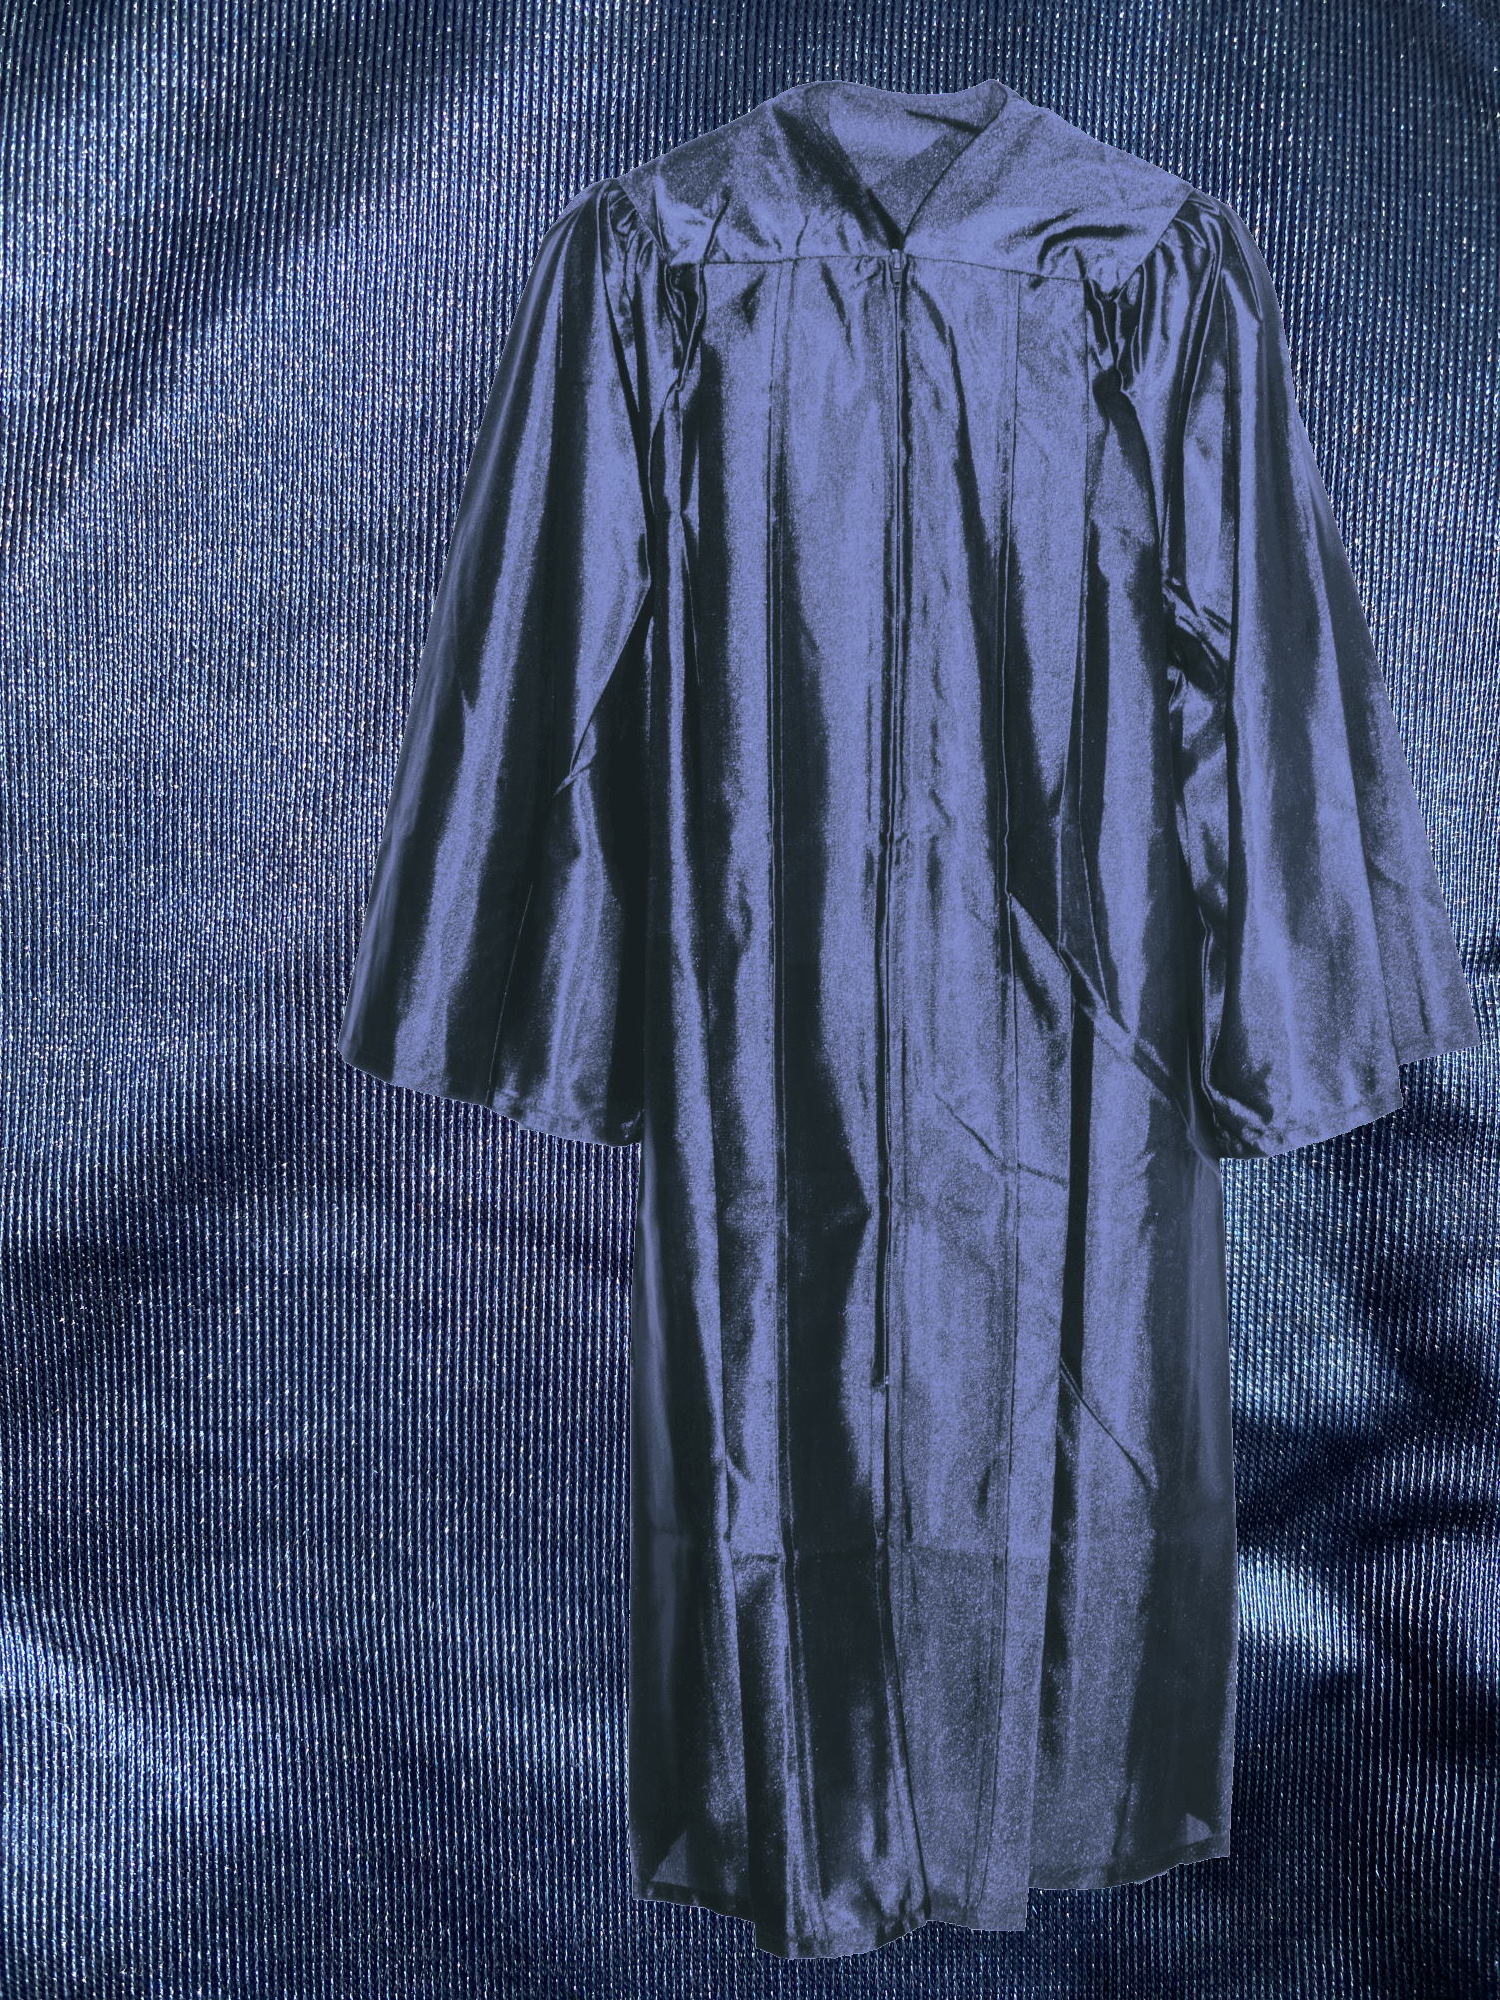 Robe Graduation Gown Mil marineblau 